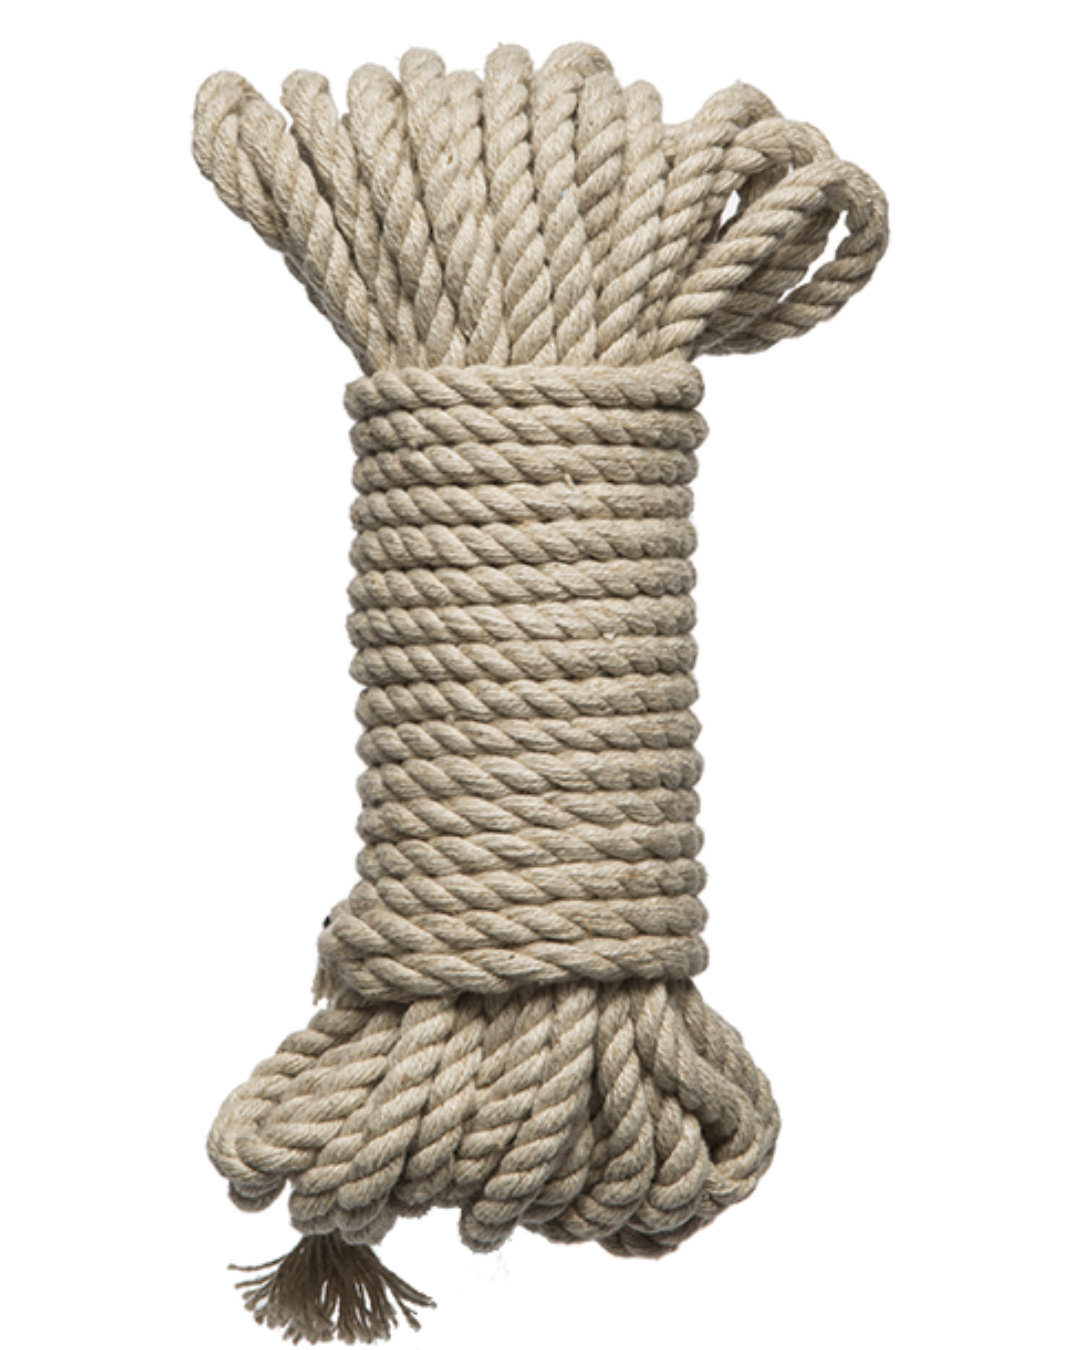 Bind and Tie Hemp Bondage Rope - Kink by Doc Johnson